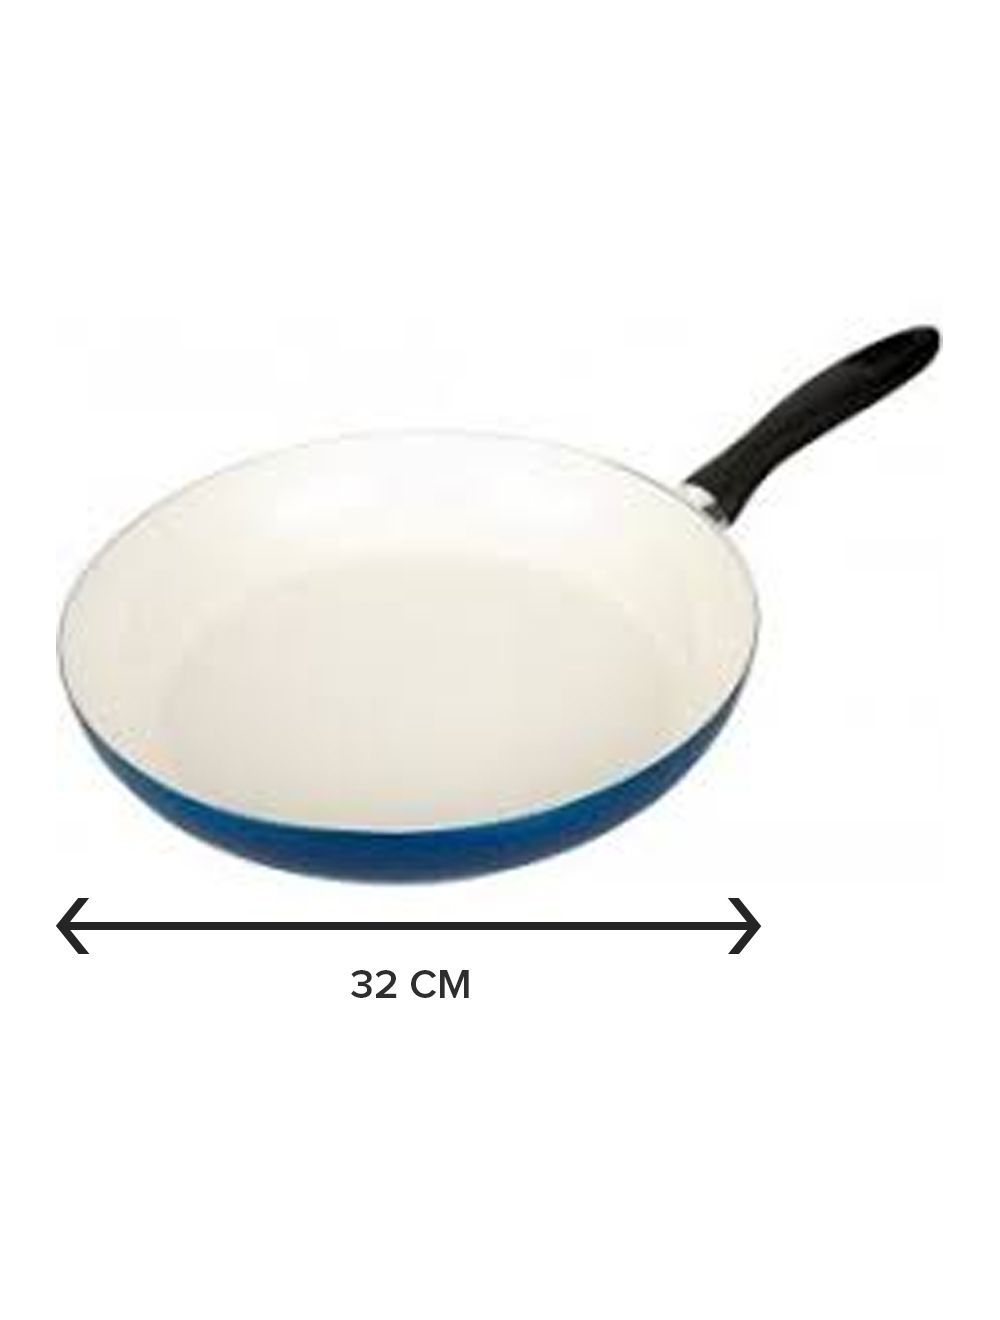 Tescoma 32 cm Frying Pan